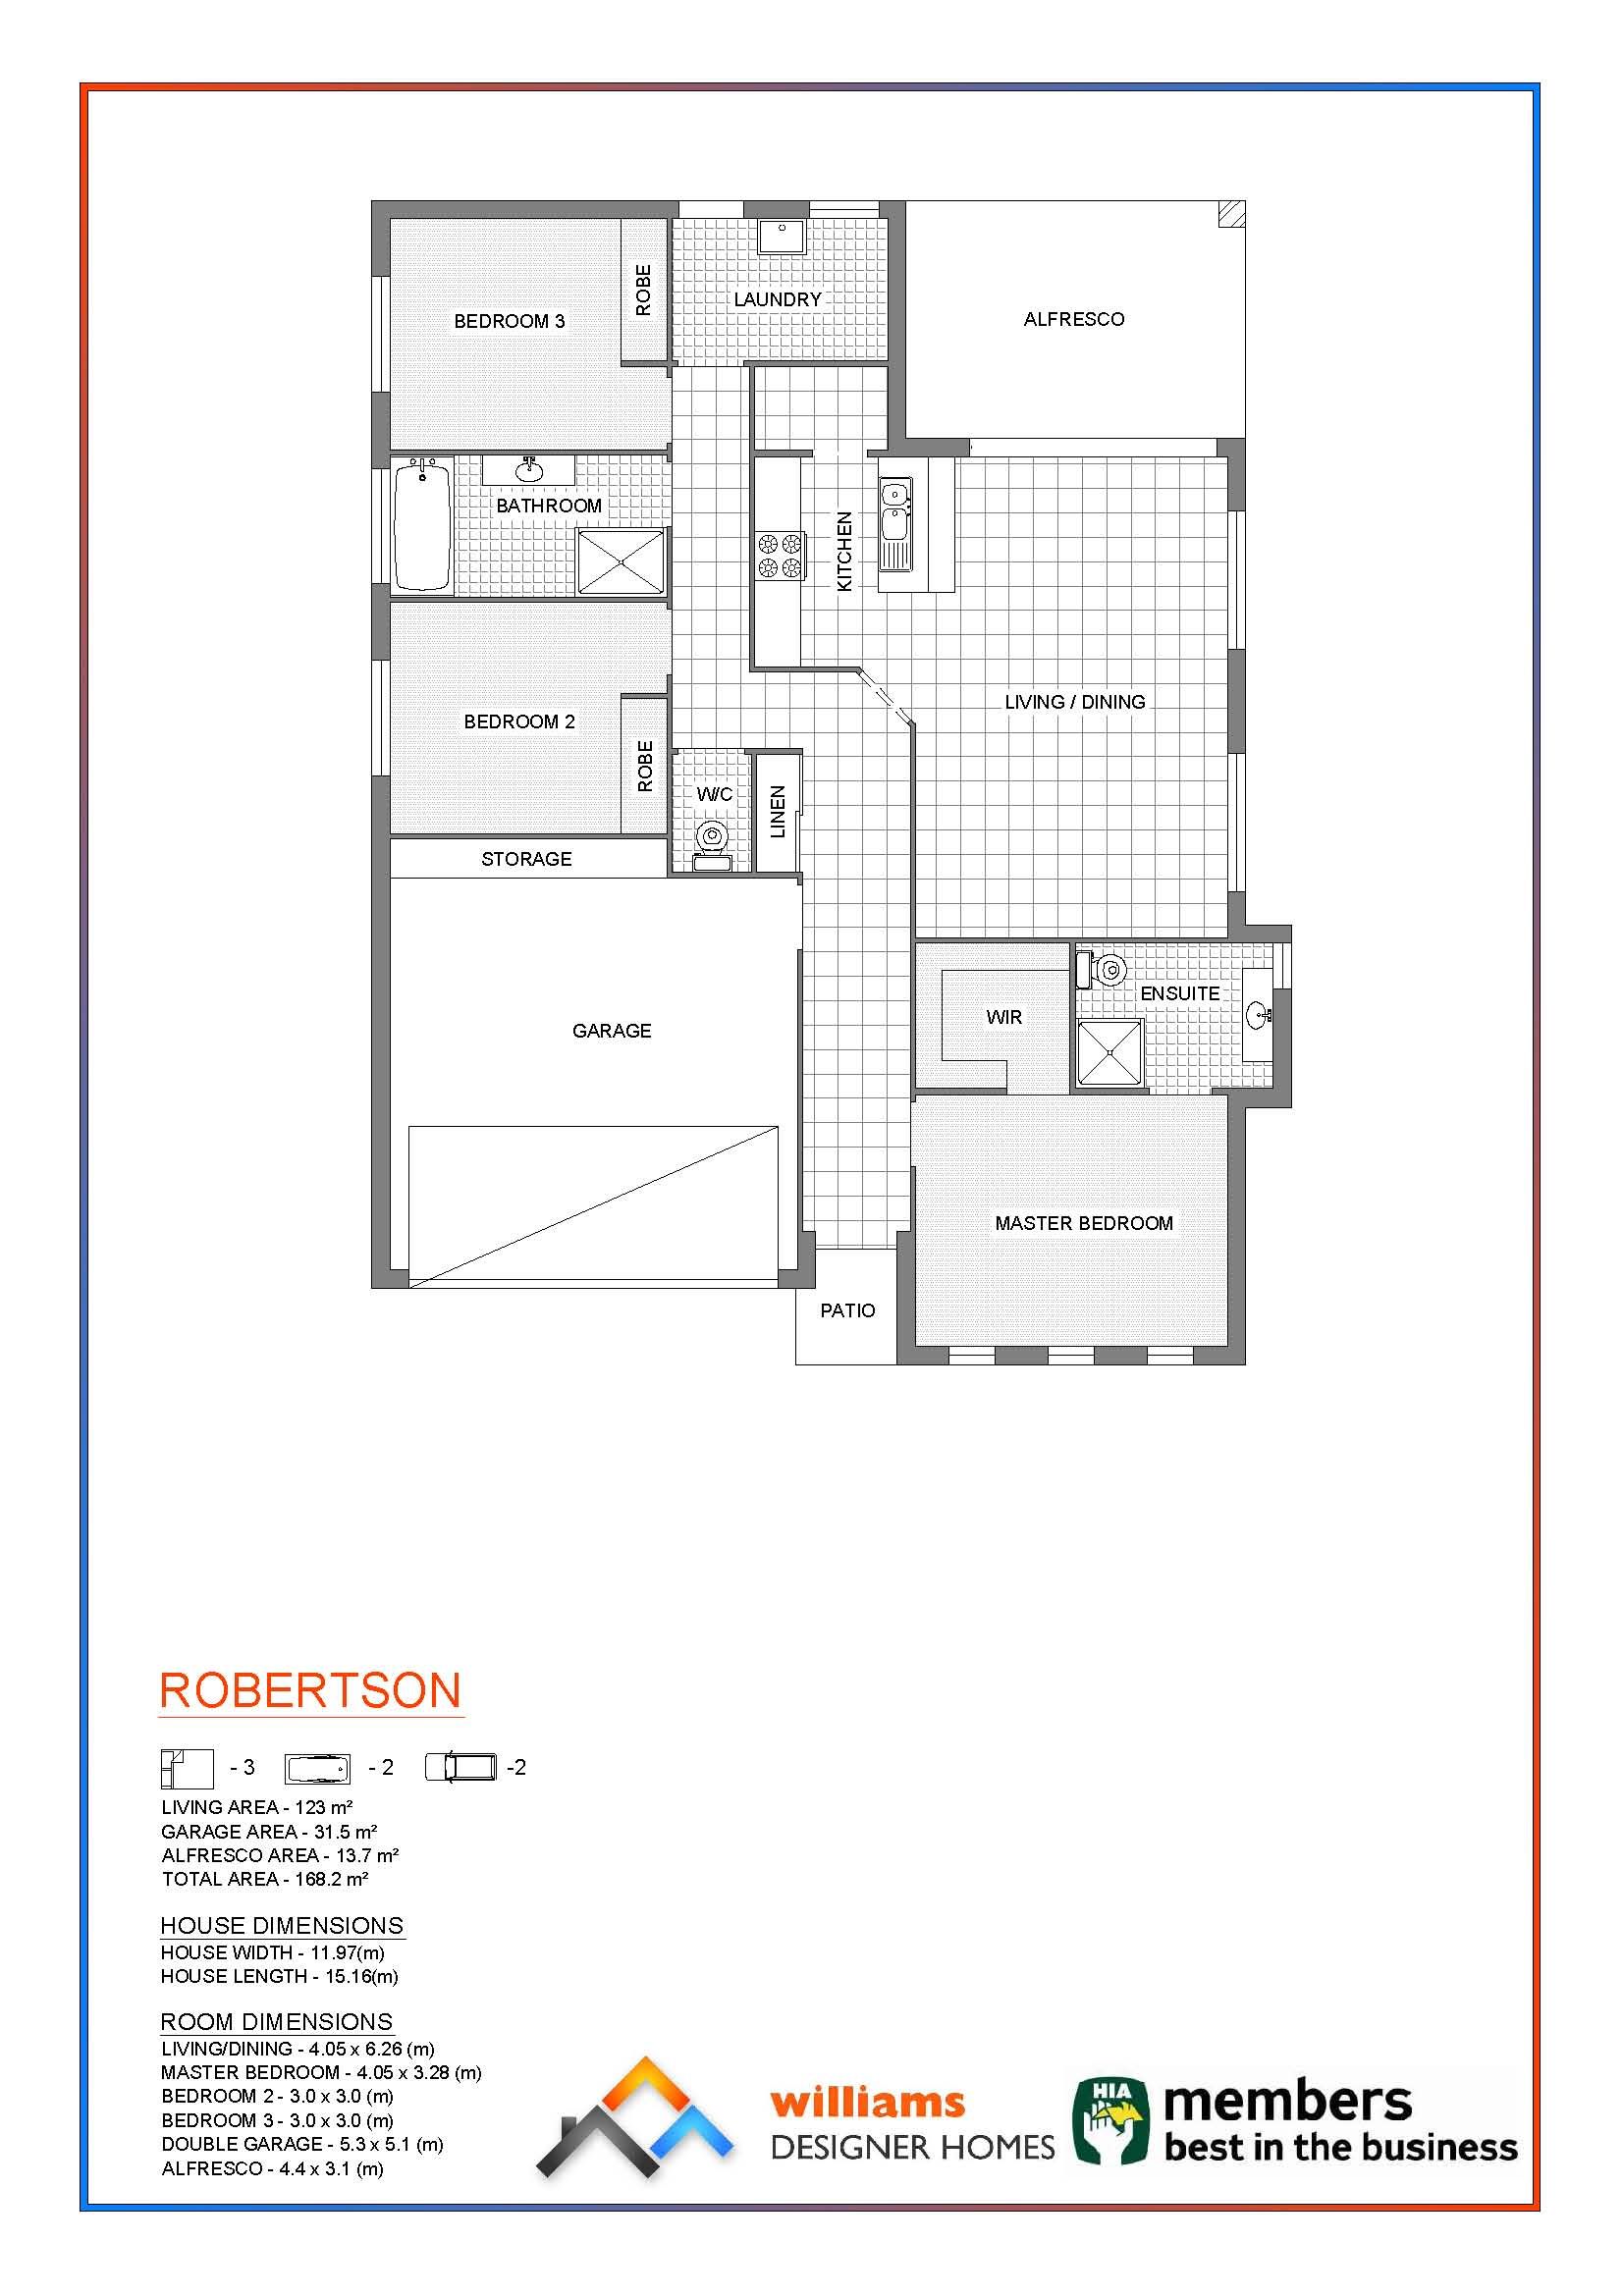 The Robertson Floor Plan was designed by Williams Designer